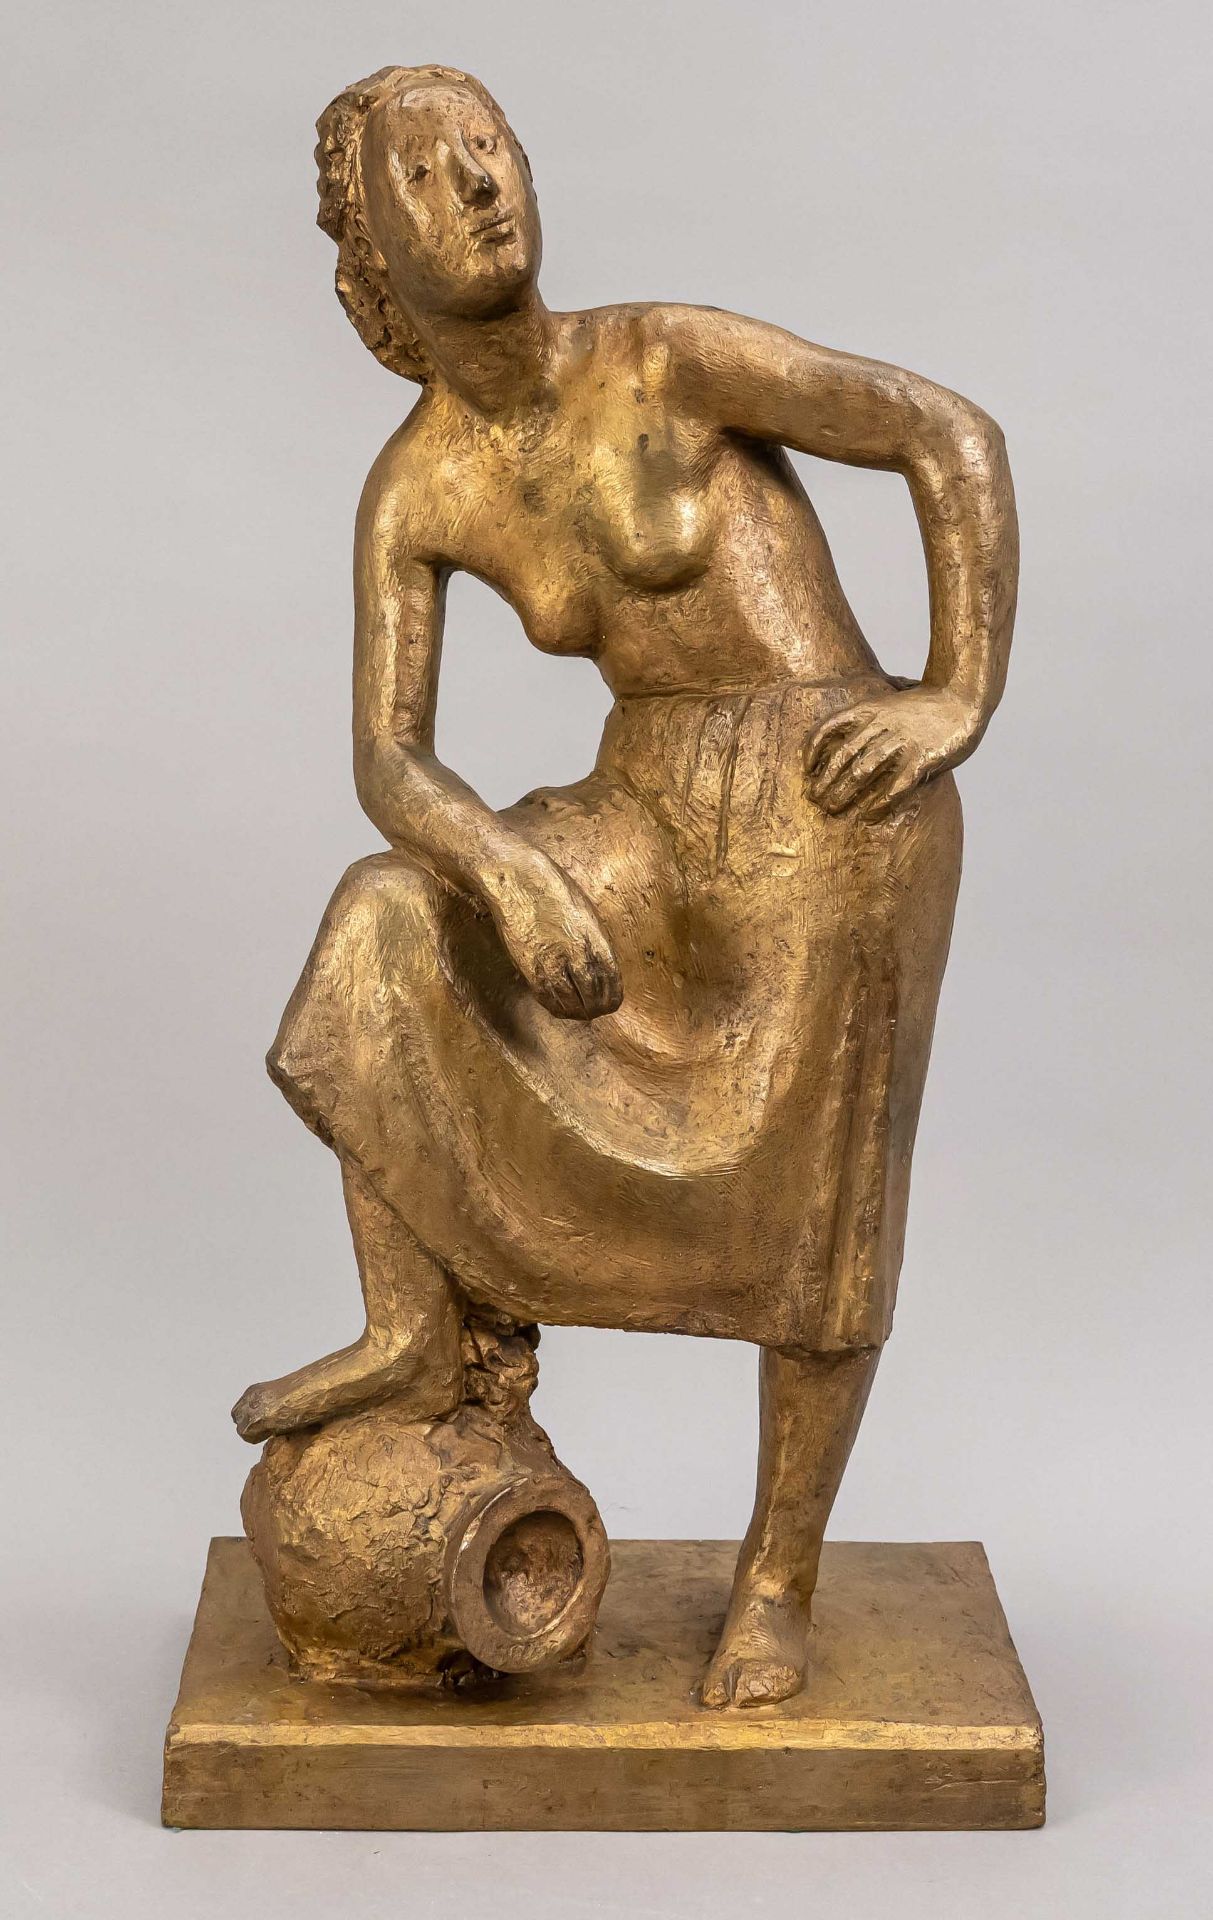 Marcks, Gerhard. 1889 Berlin - 1981 Burgbrohl. Girl with jug. Design 1942. cast brass, patinated. On